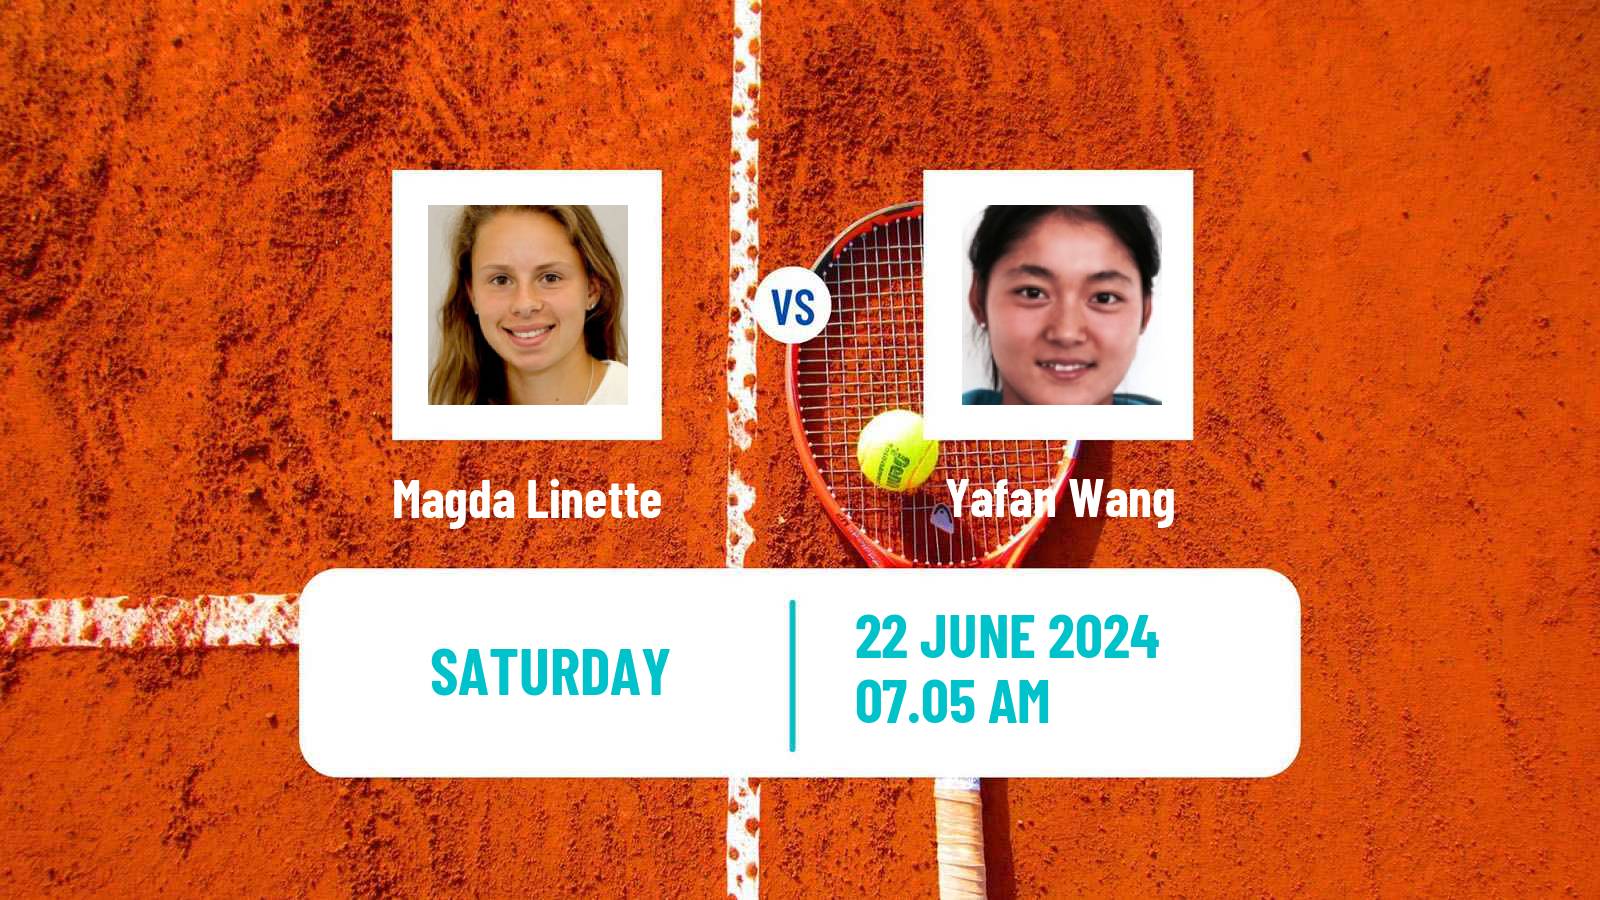 Tennis WTA Eastbourne Magda Linette - Yafan Wang